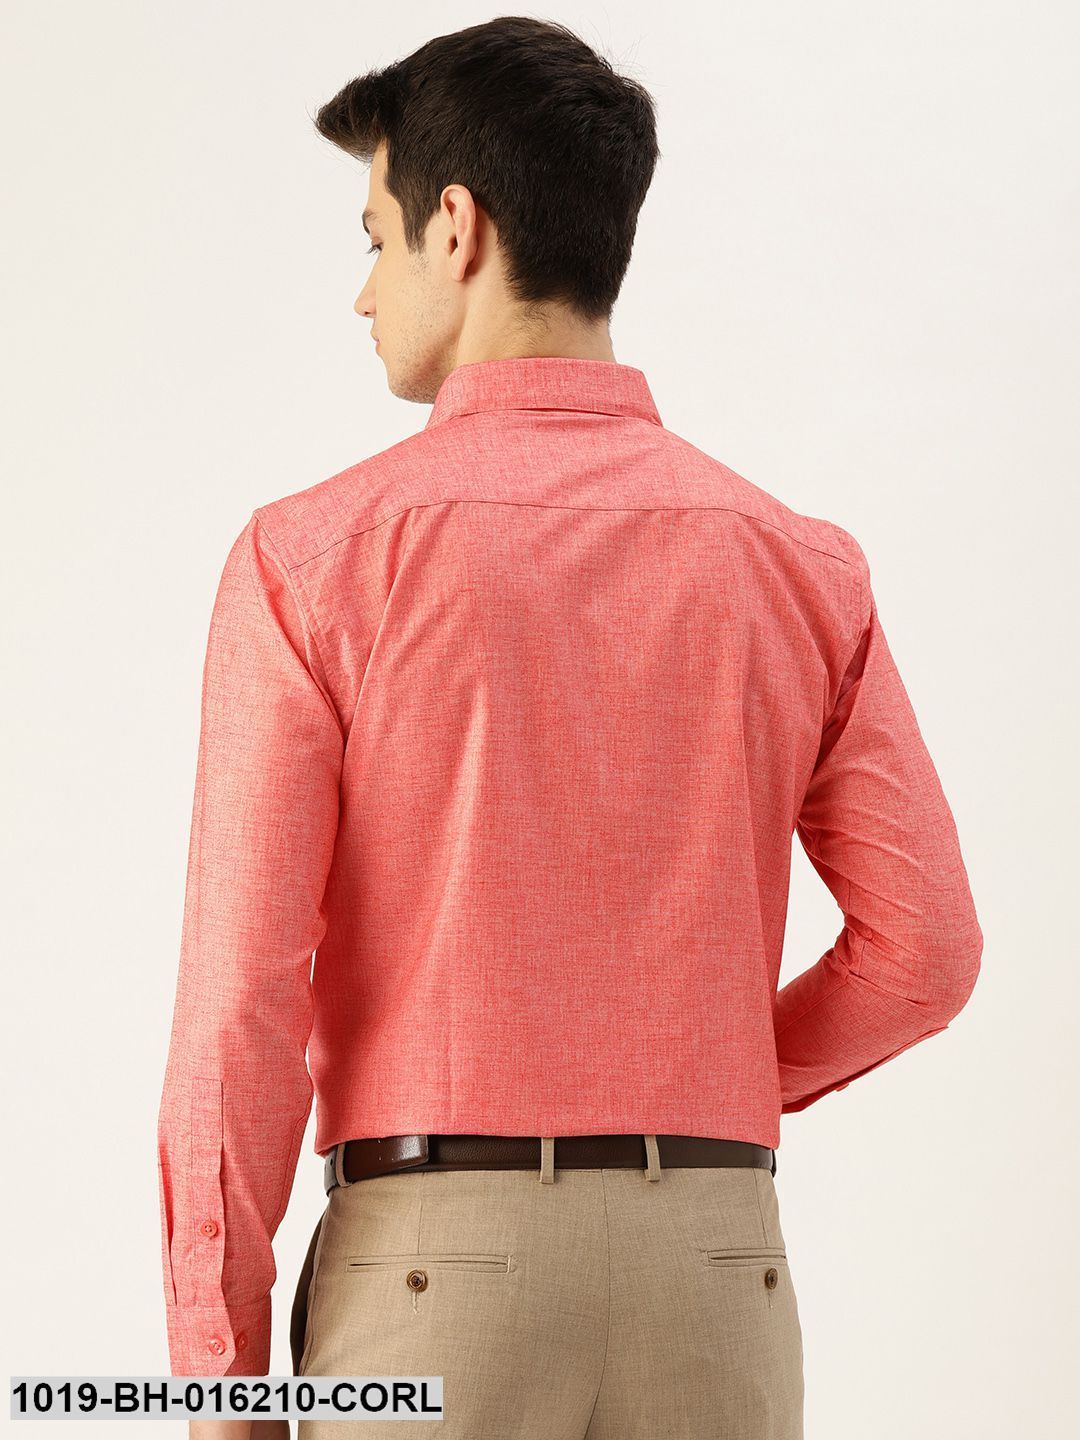 Men's Cotton Linen Coral Solid Formal Shirt - Sojanya